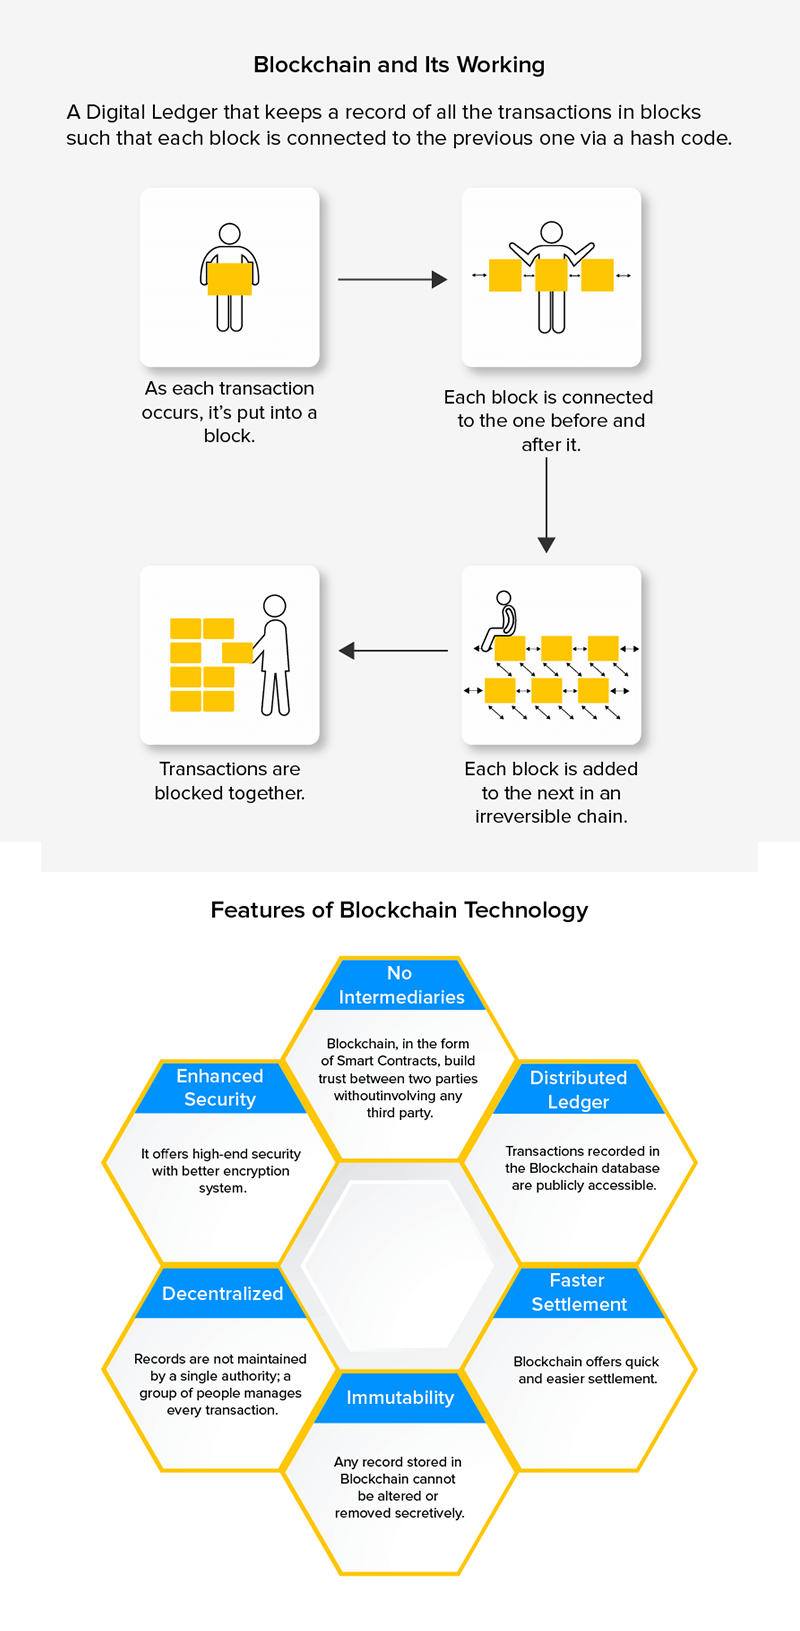 Benefits of Blockchain